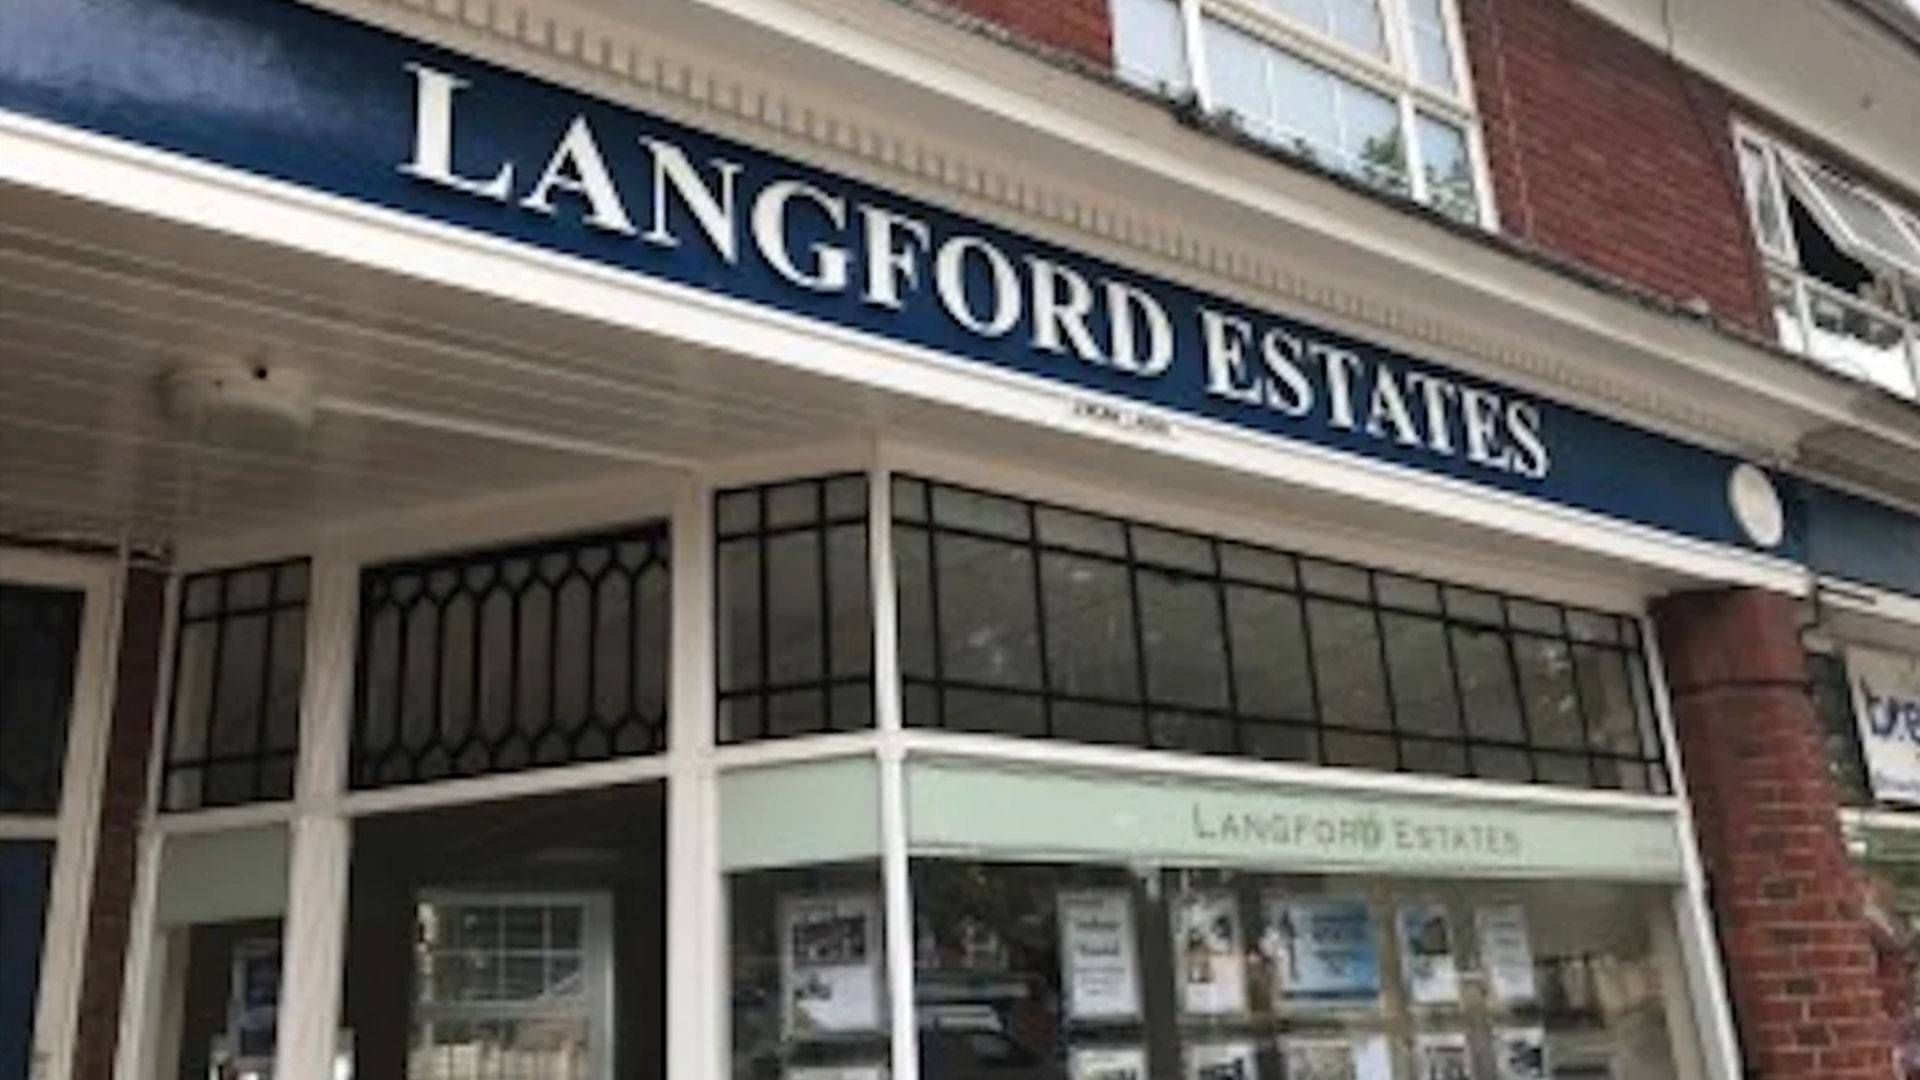 Websters acquires Langford Estates.